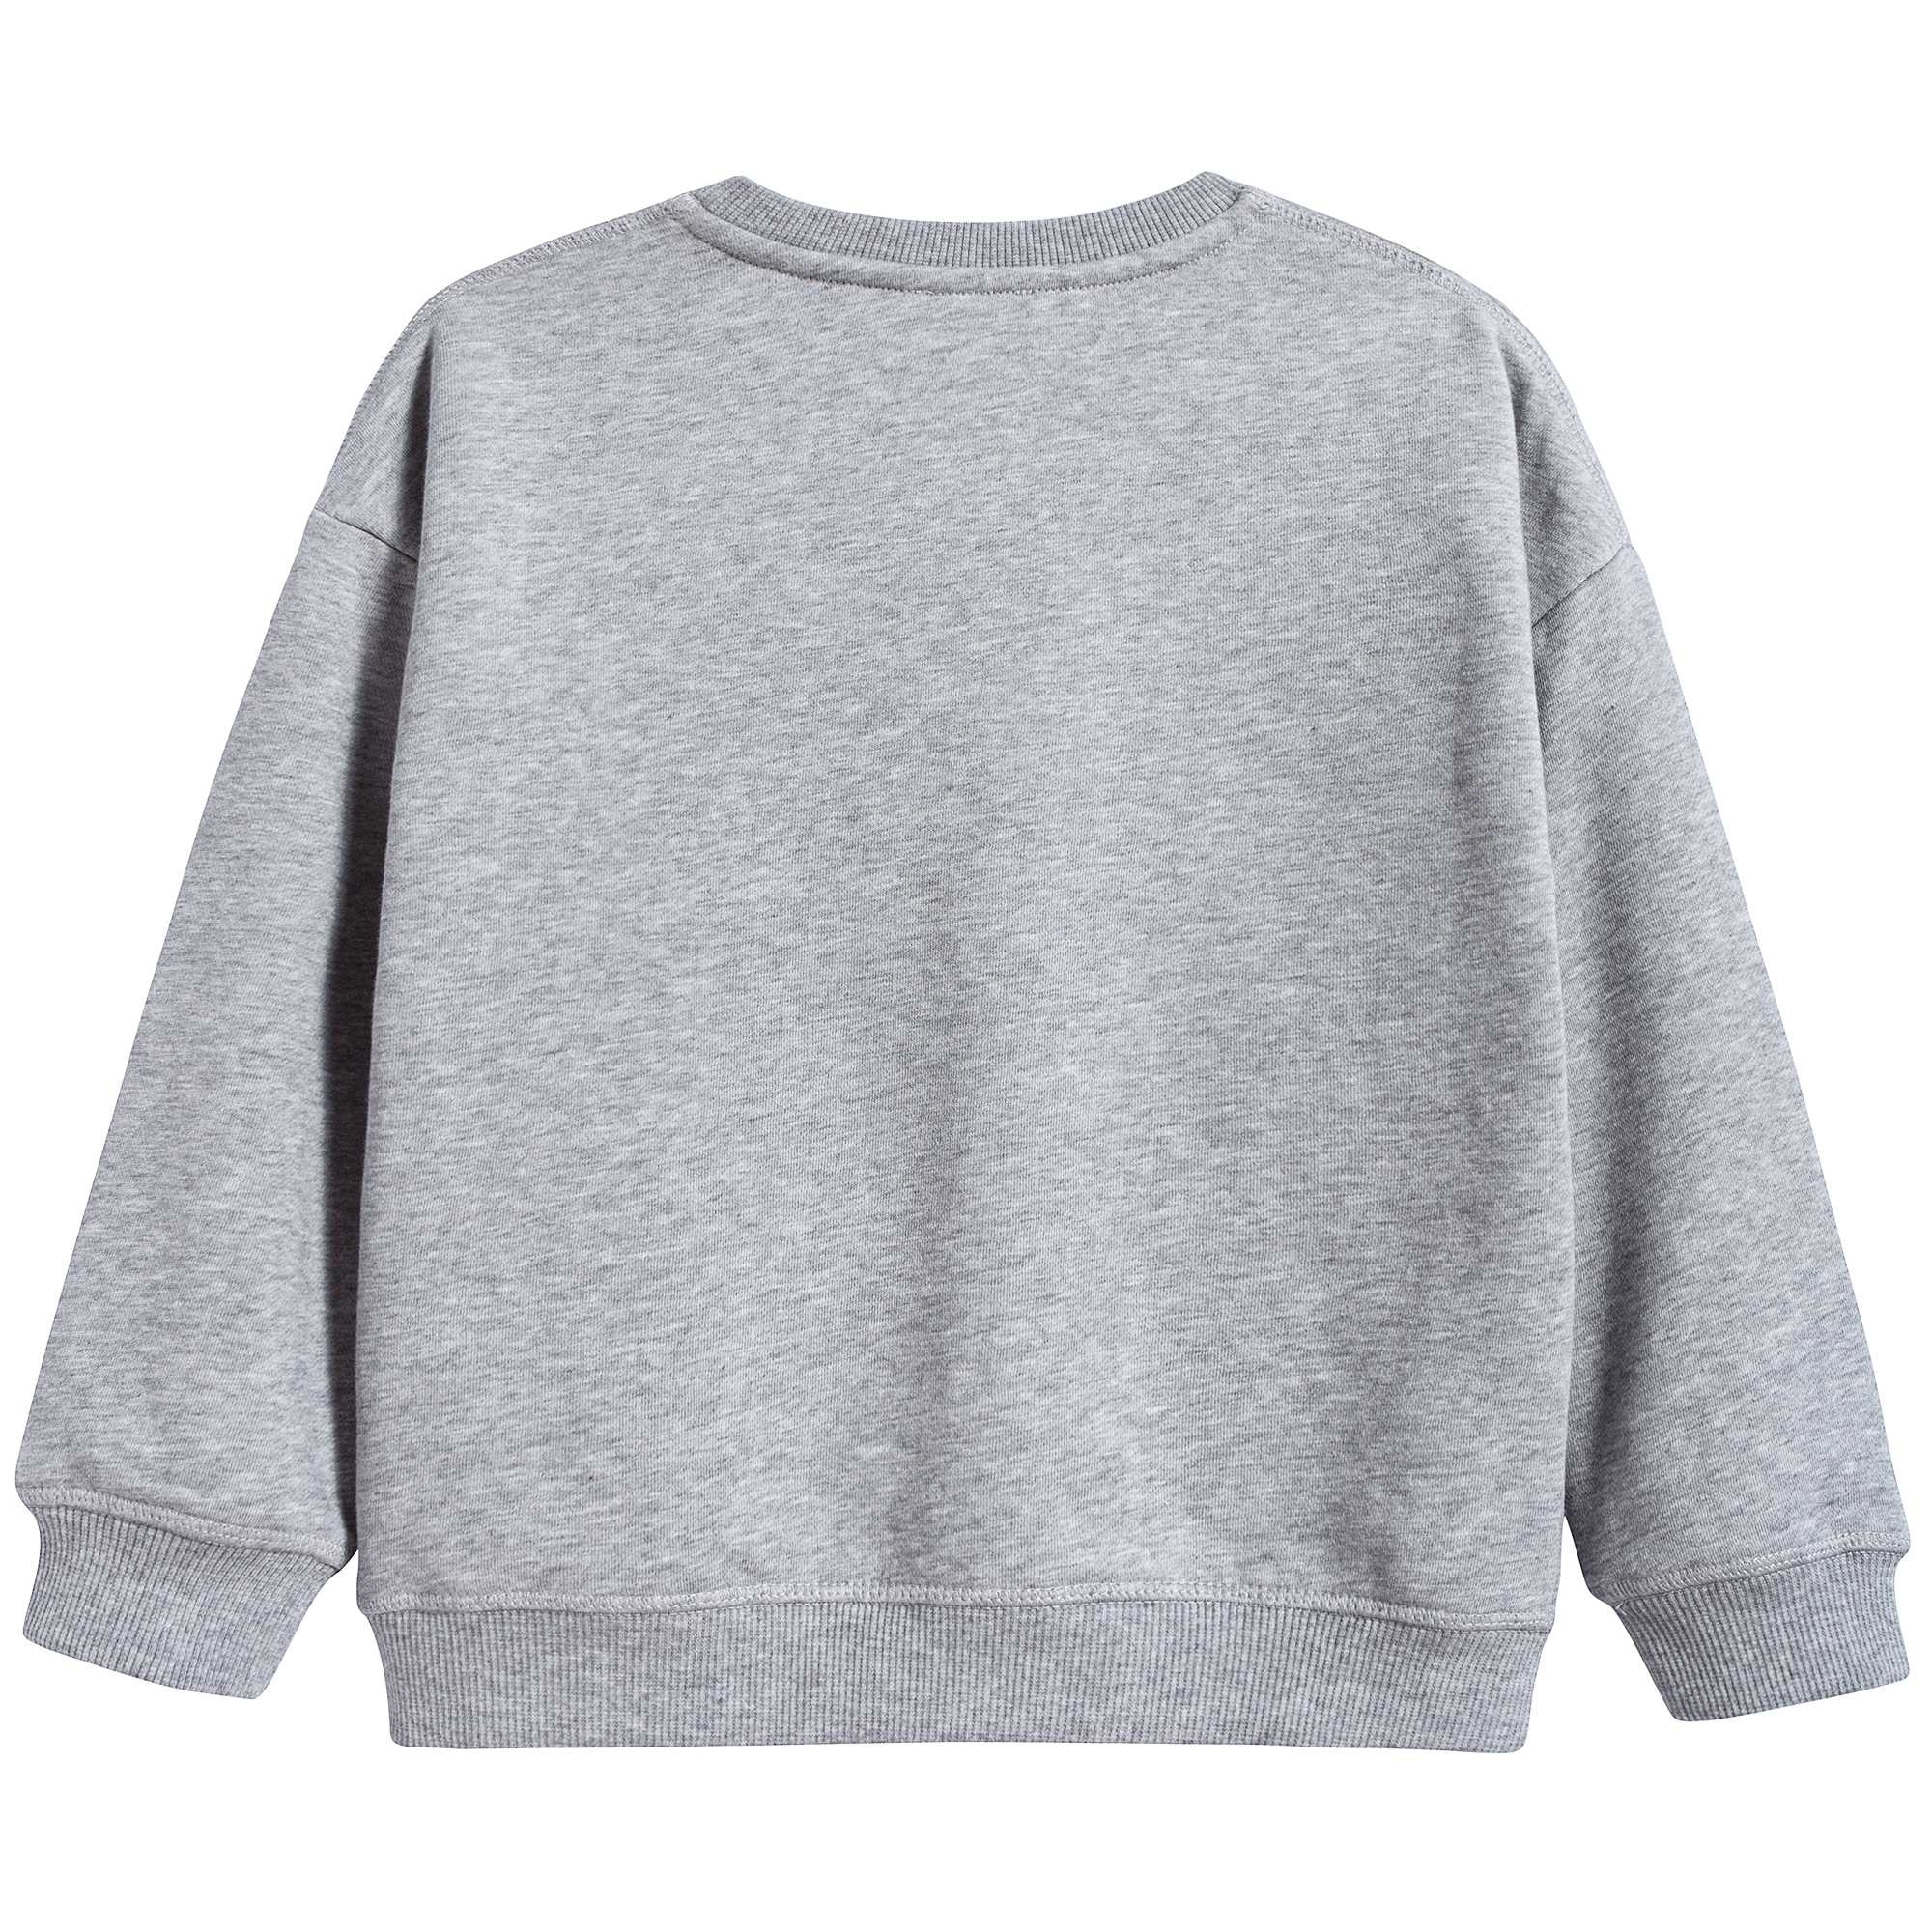 Girls Marl Grey Printed Cotton Sweatshirt